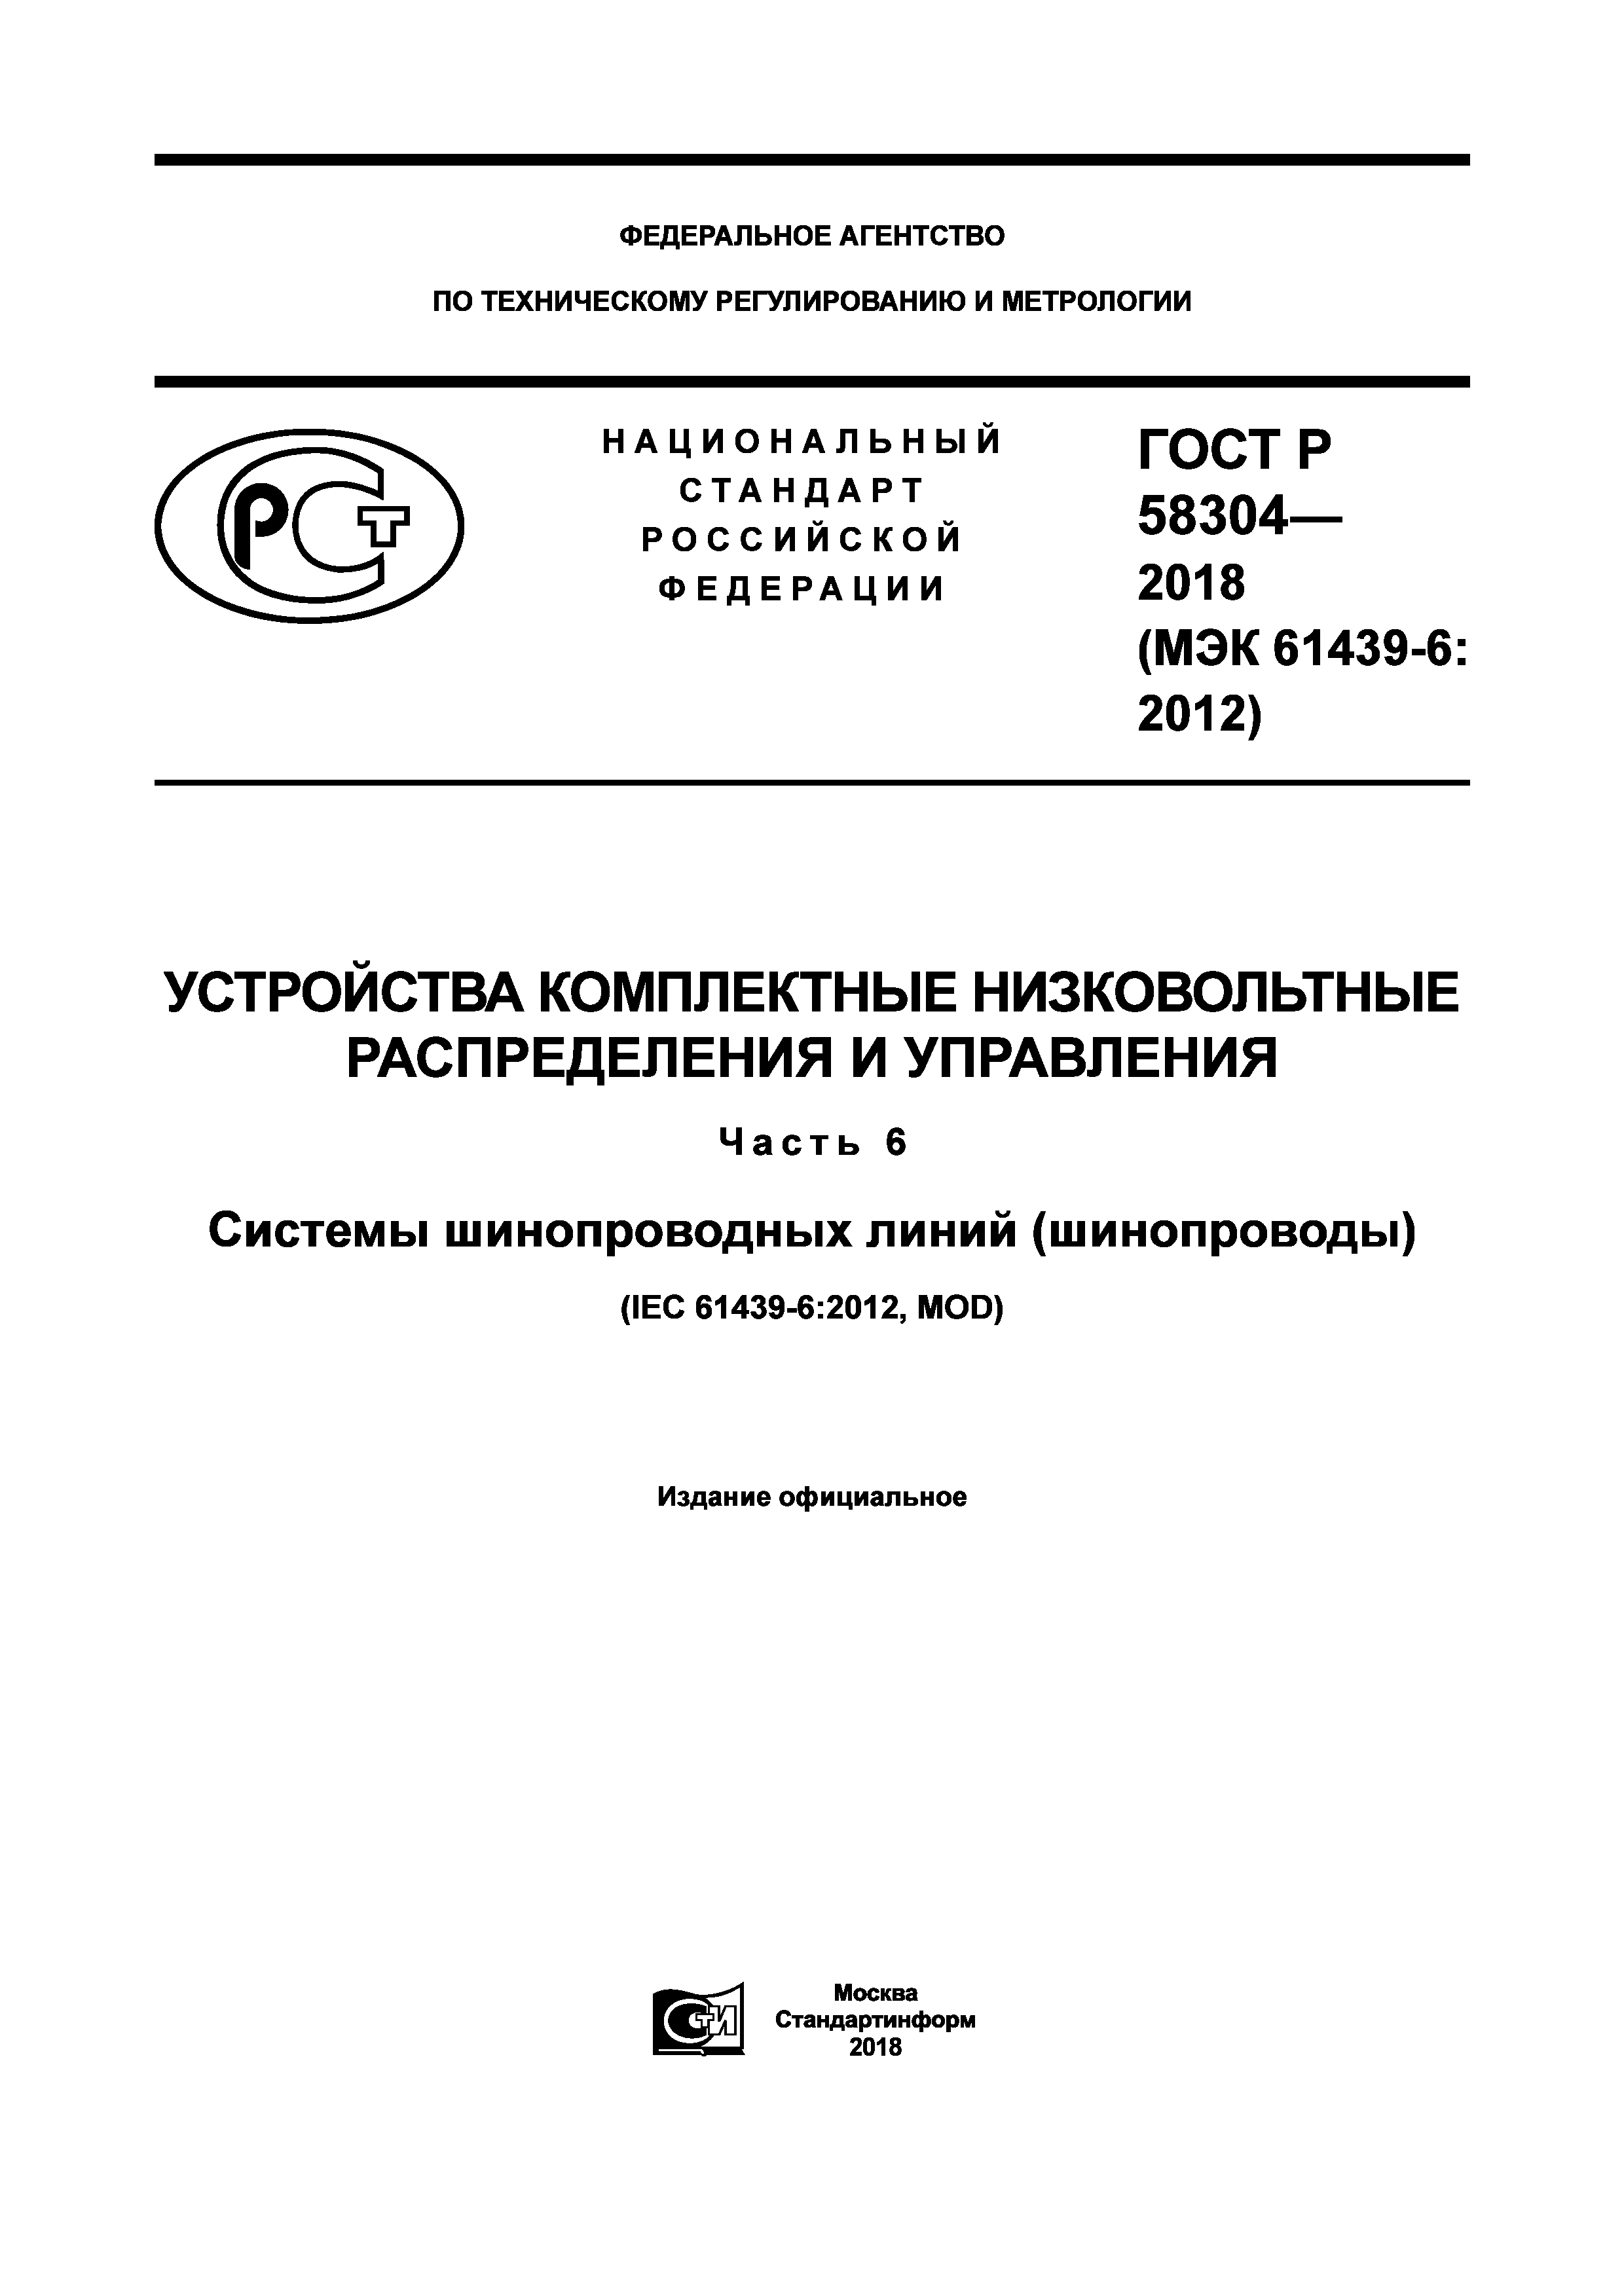 ГОСТ Р 58304-2018